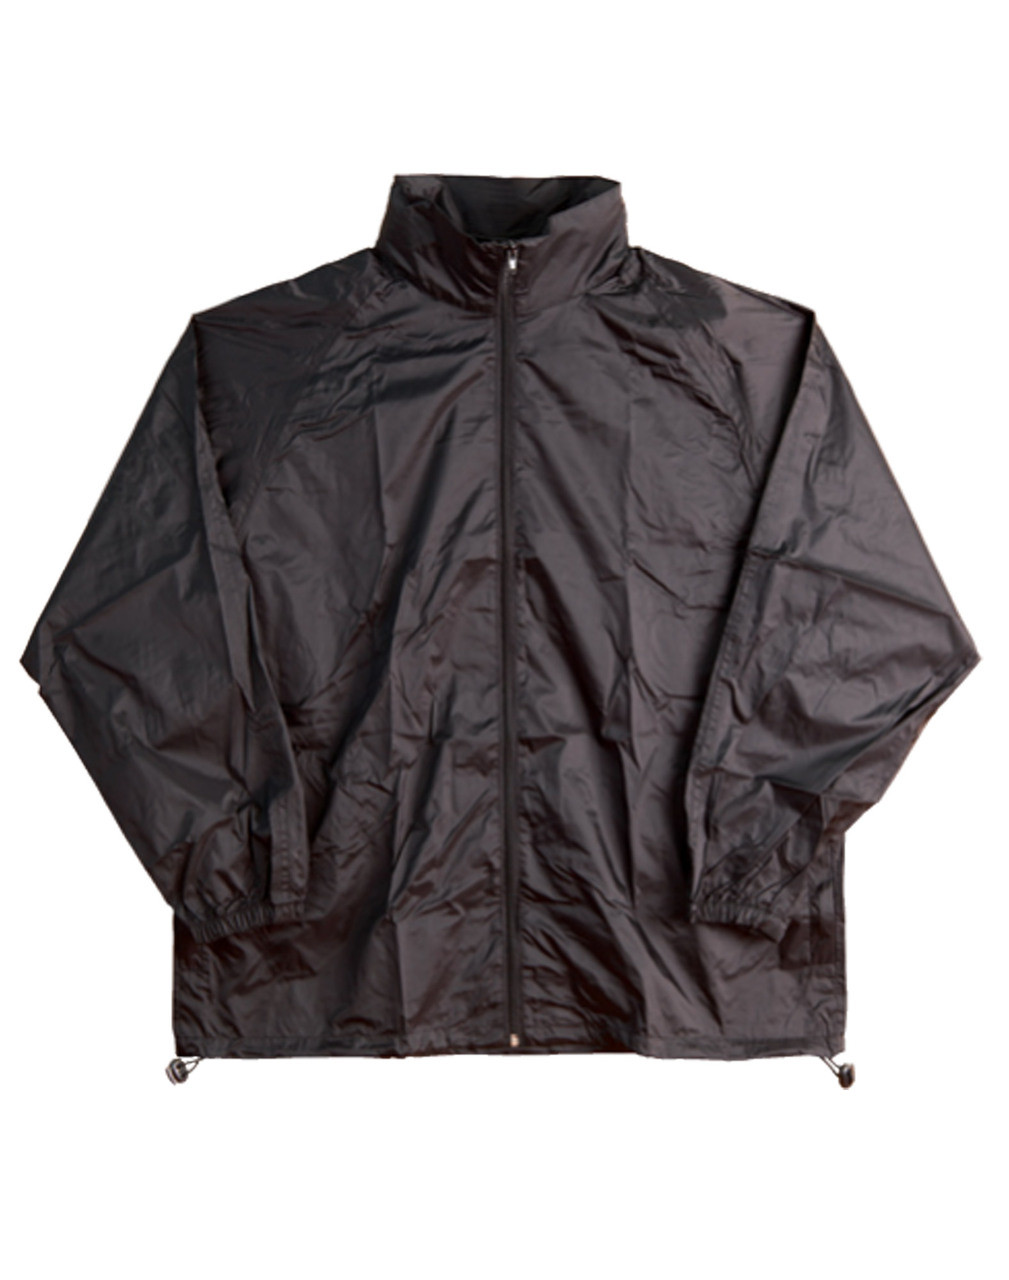 travel foldaway rain jackets with hood | wholesale plain weather jacket ...